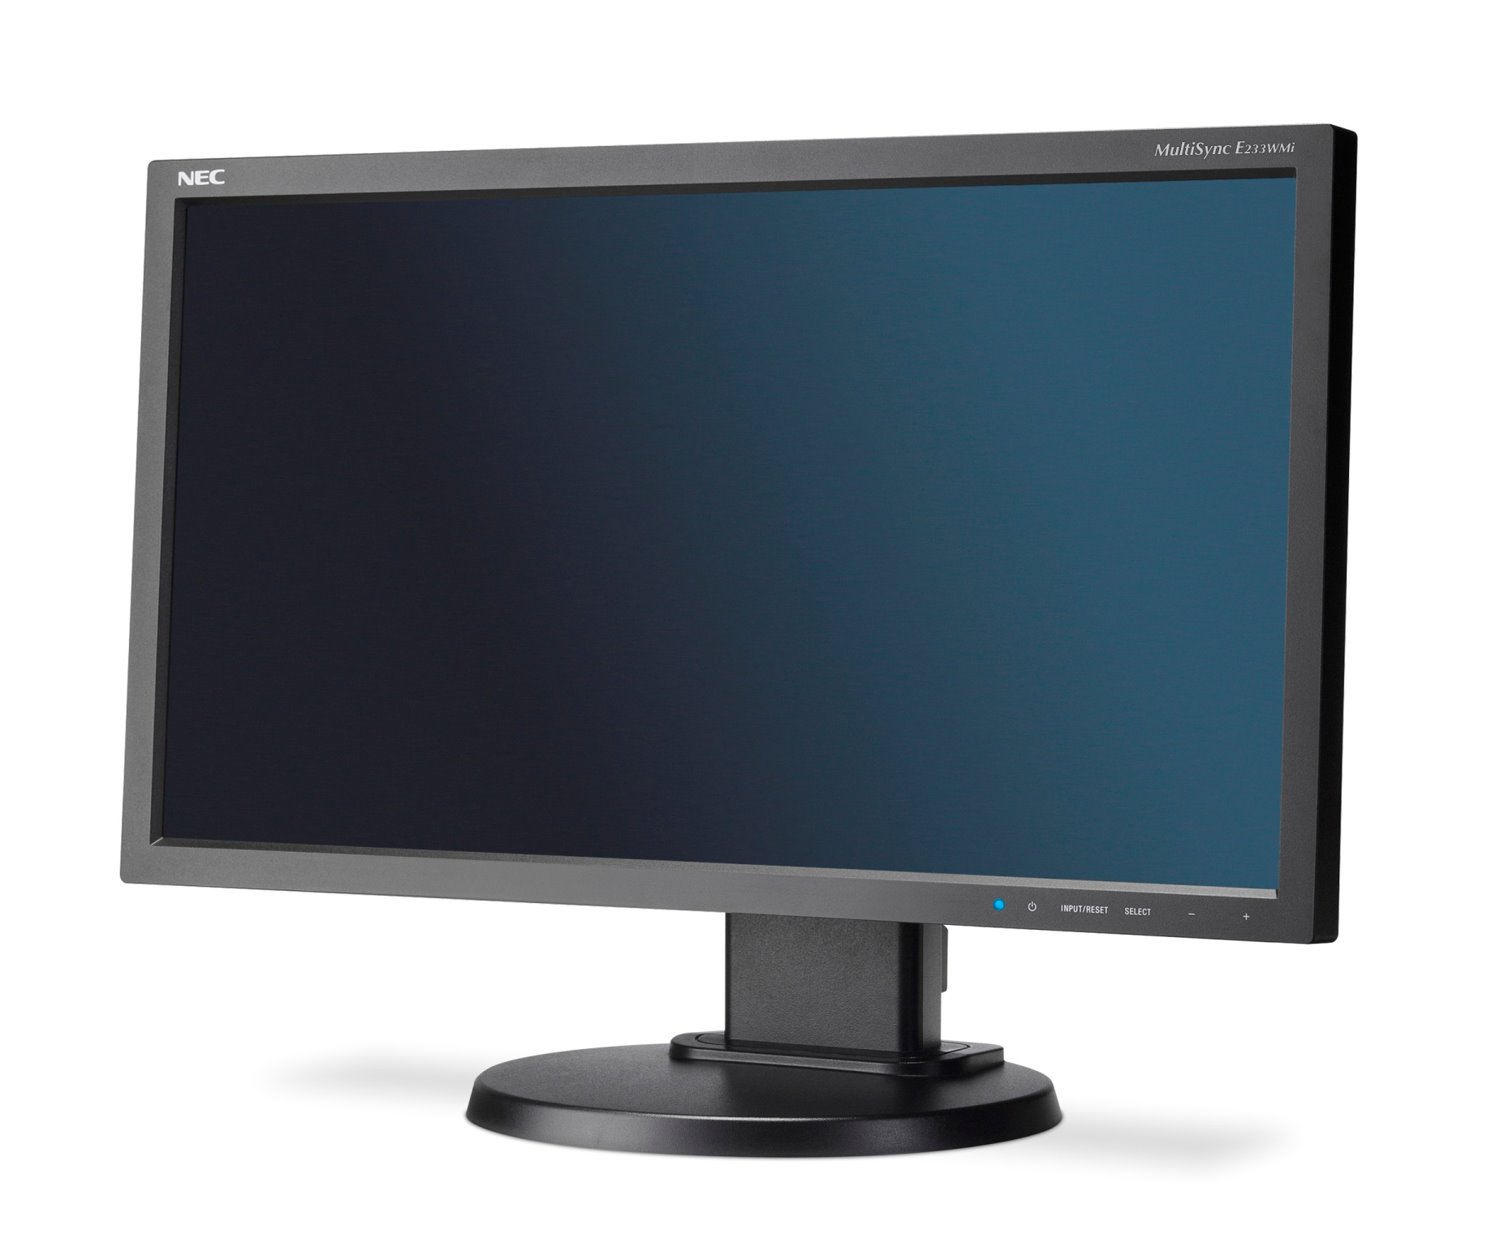 NEC Display MultiSync E233WMi 23" Full HD WLED LCD Monitor - 16:9 - Black